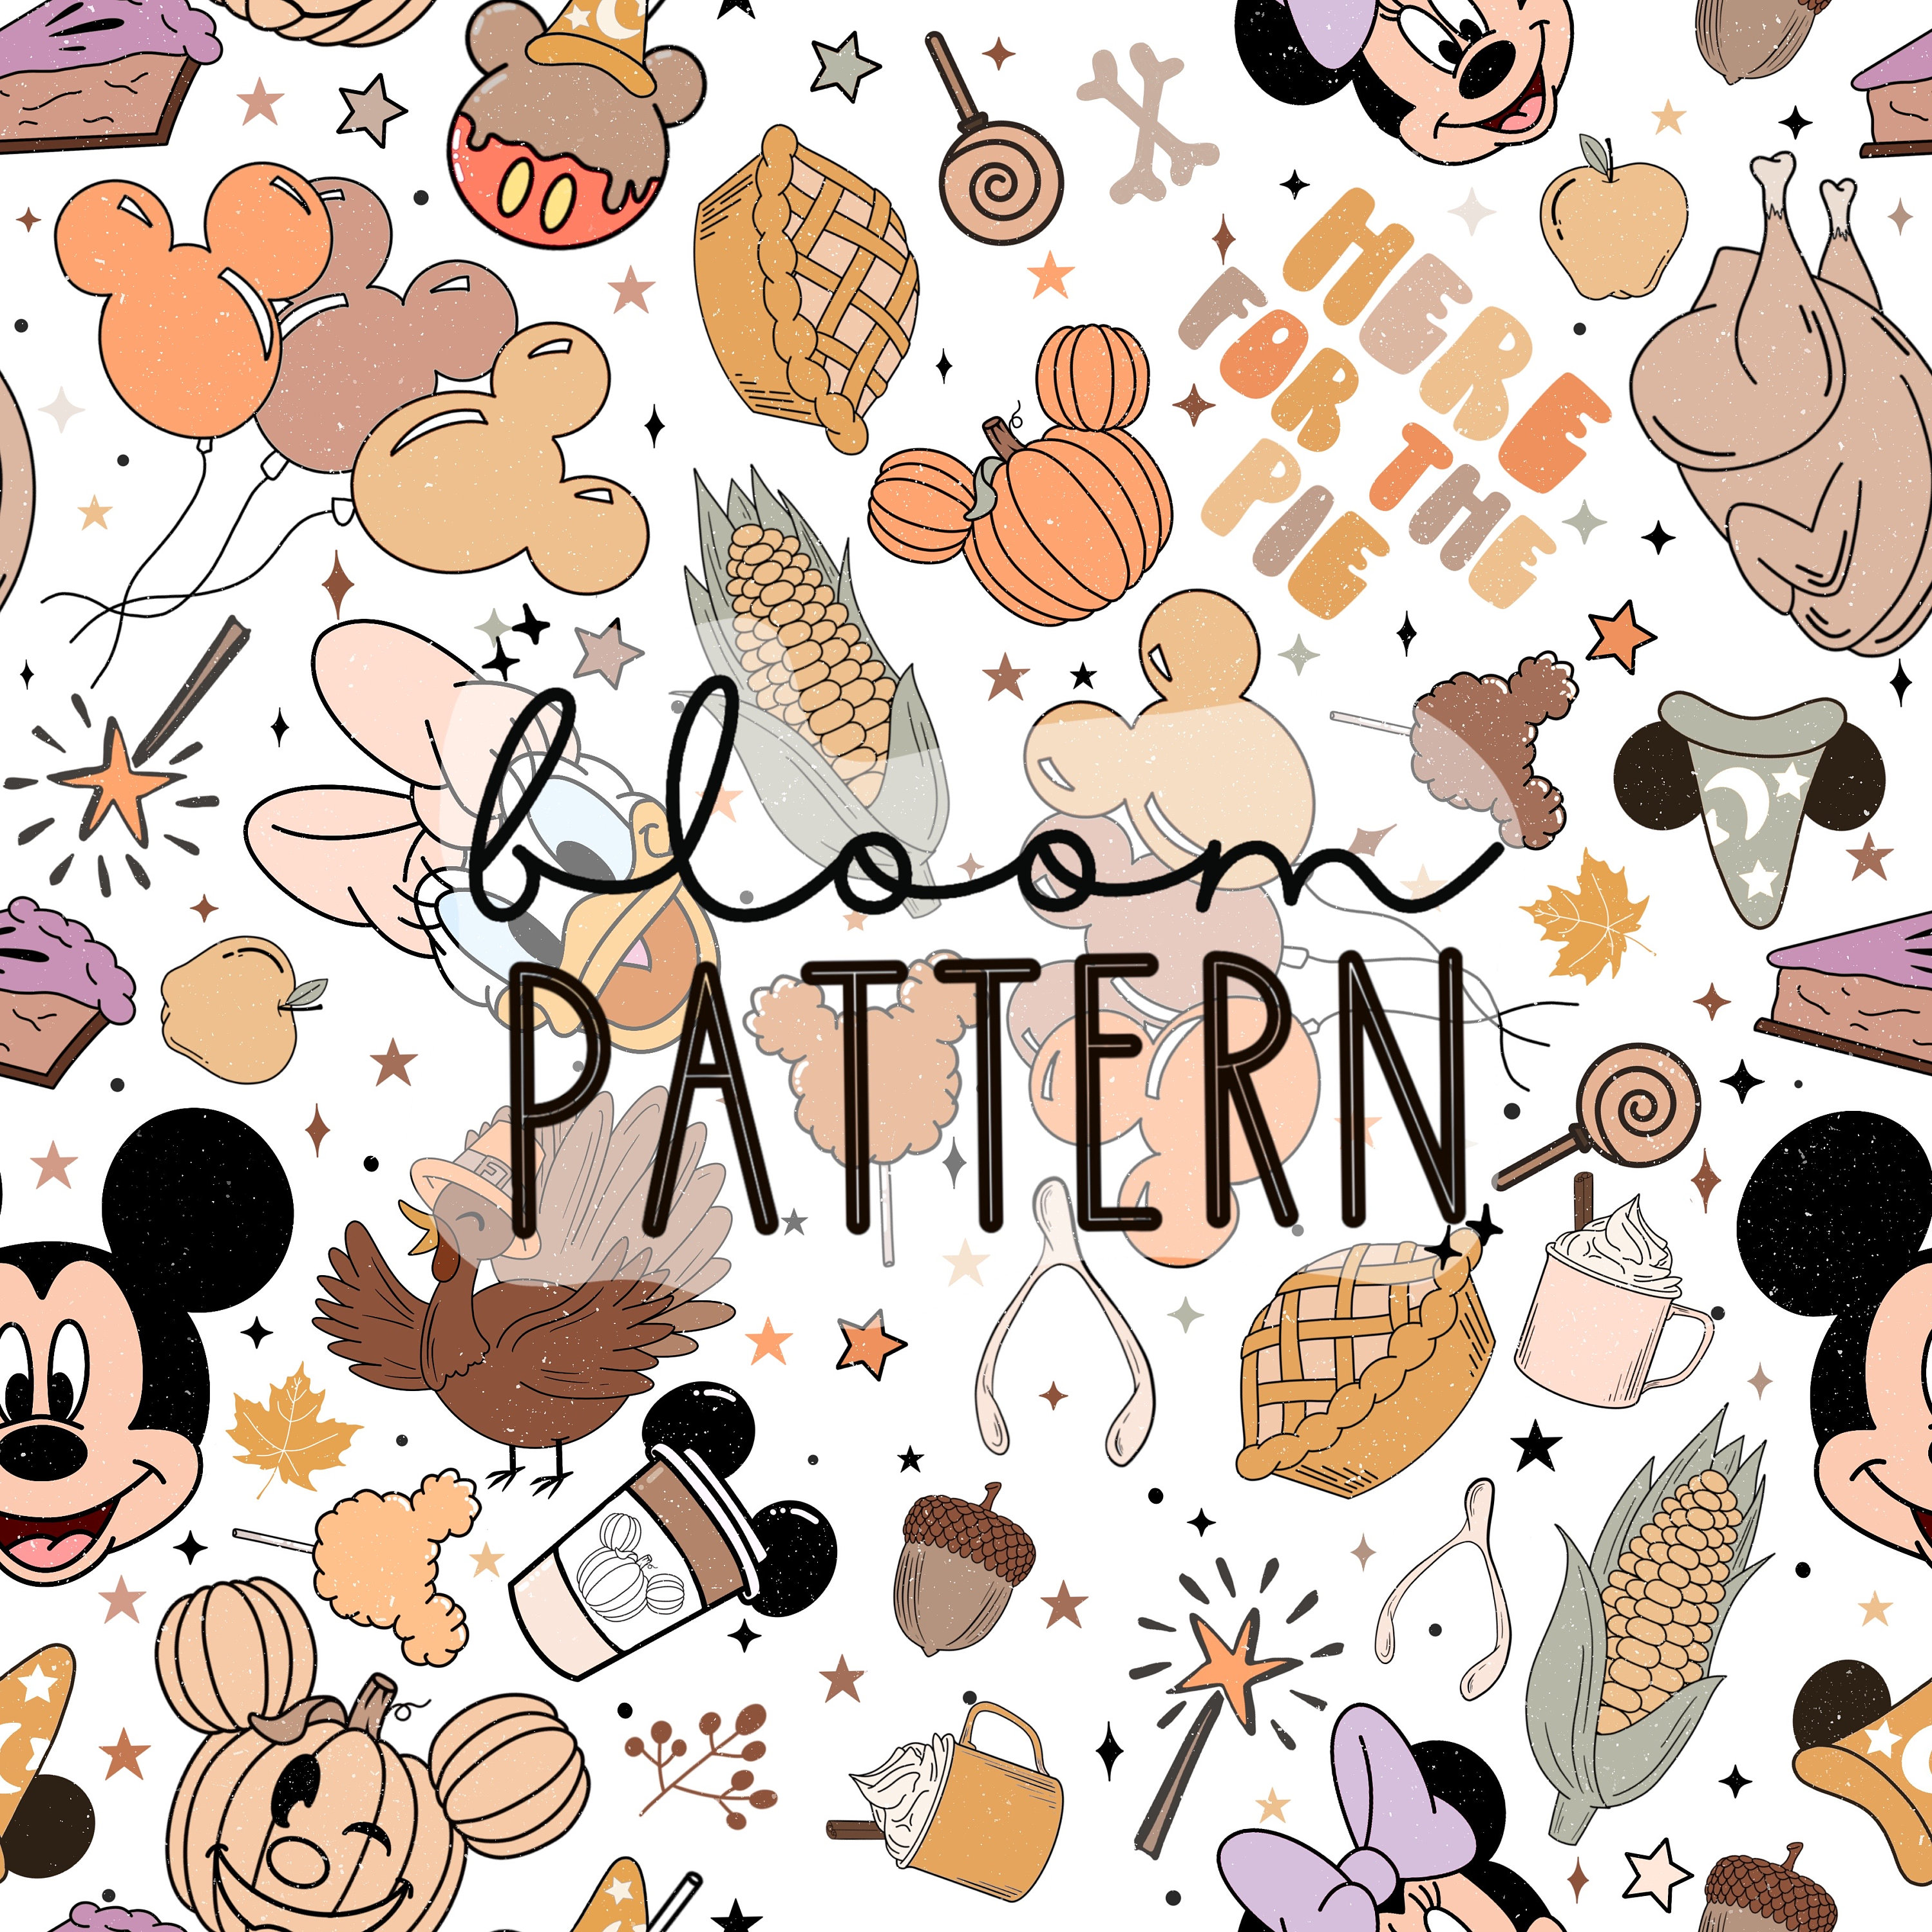 Disney Seamless Patterns, Vol. 2: Louis Vuitton by itsfarahbakhsh